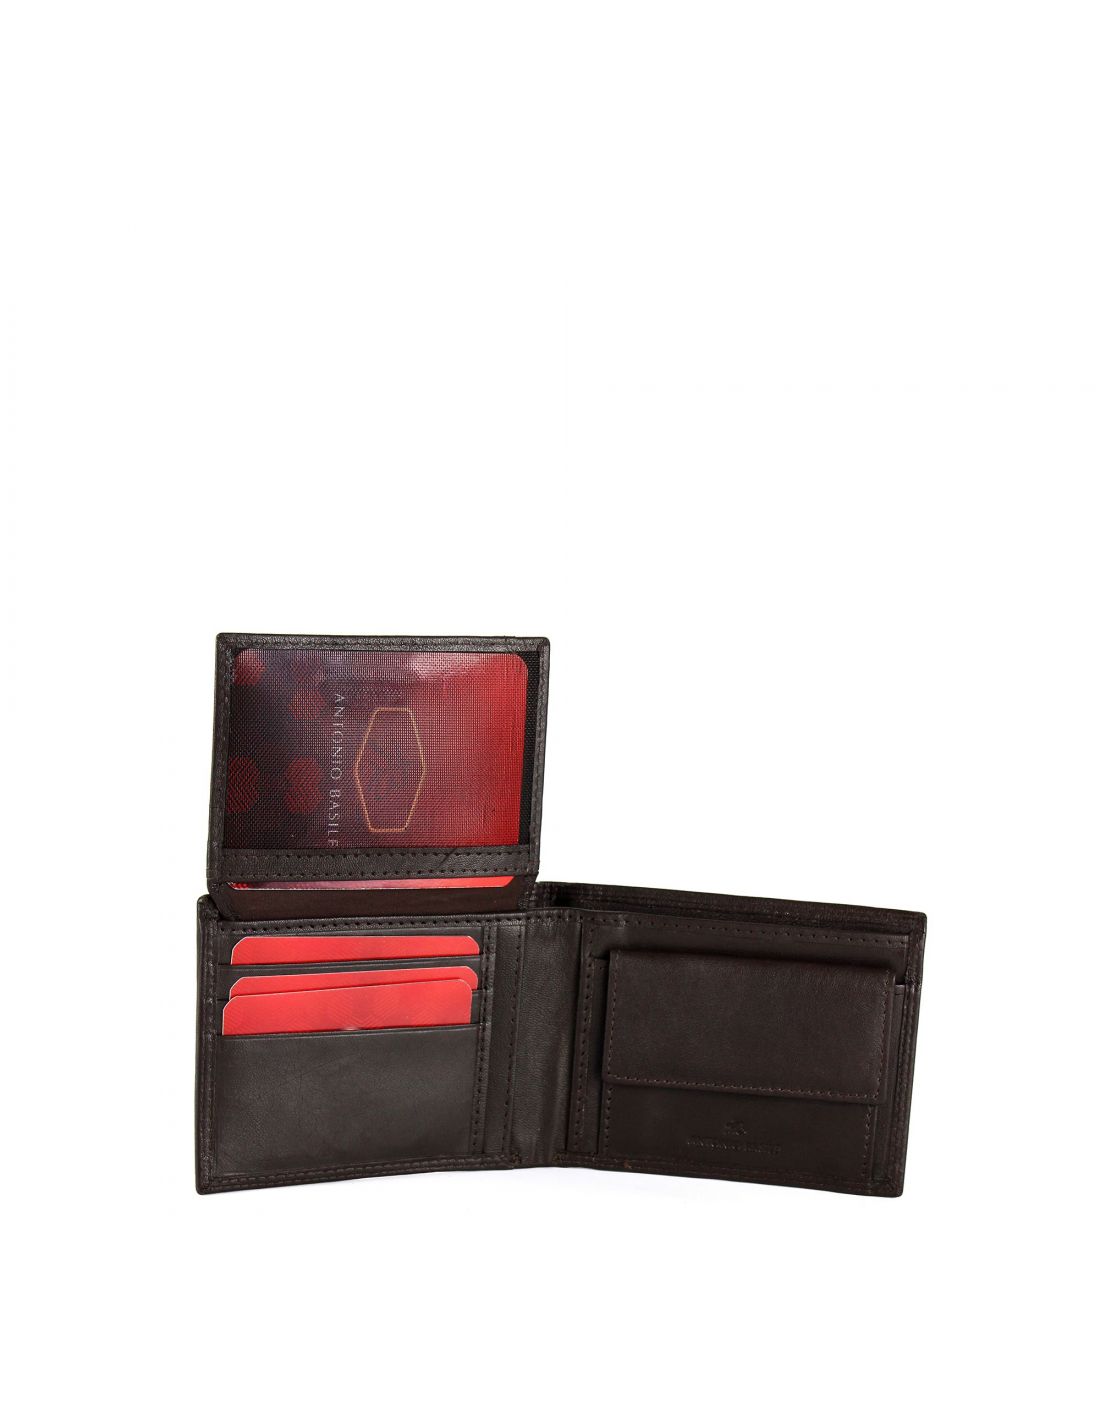 Antonio Basile Men wallet in genuine leather